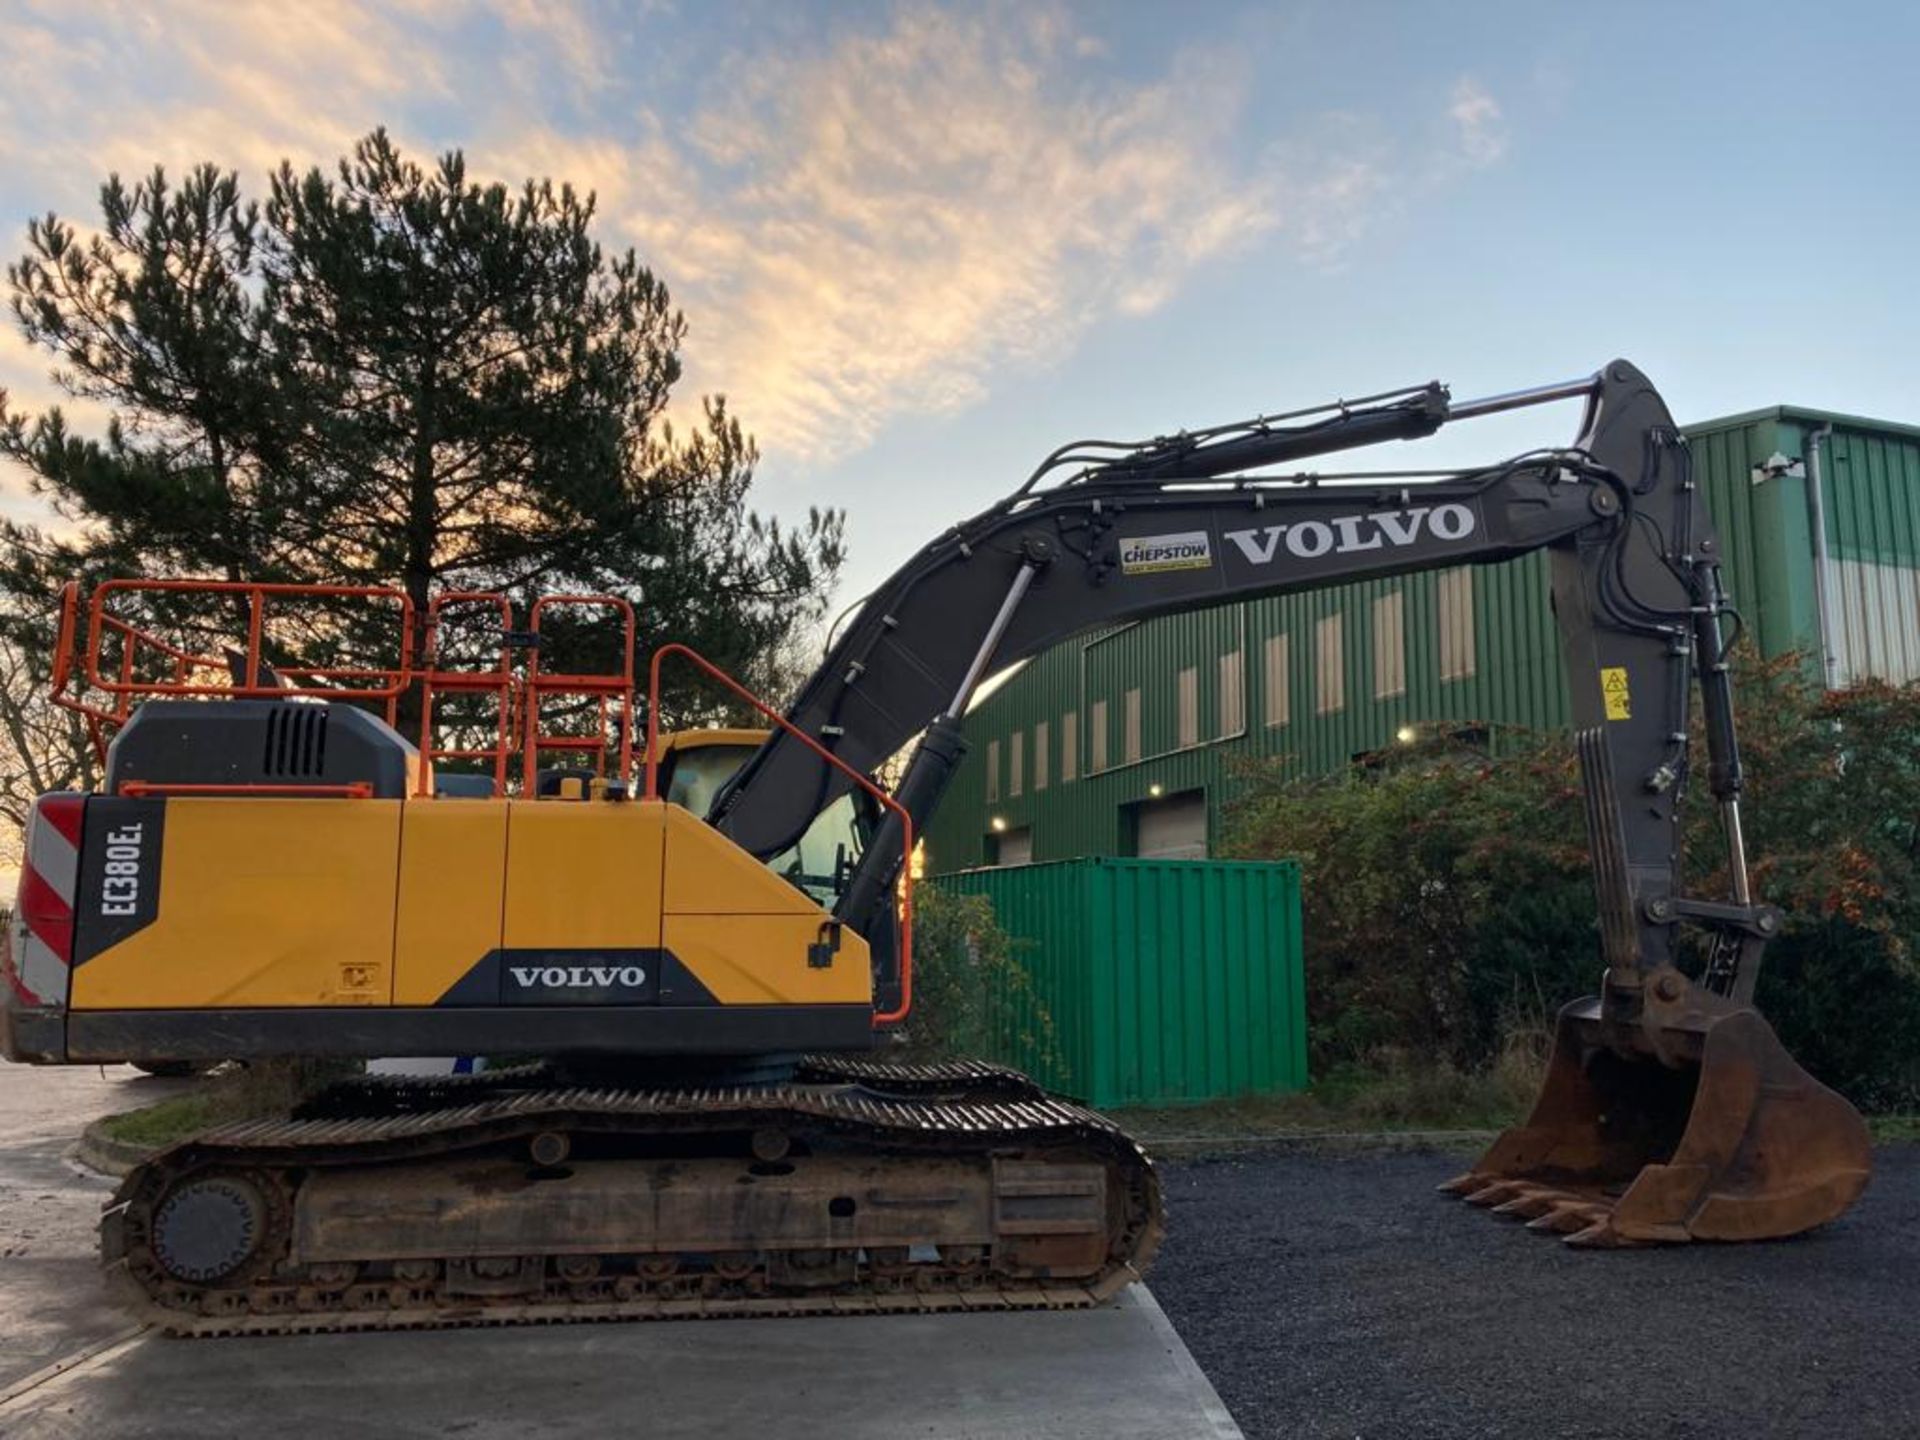 Direct from Volvo Main Dealer, 2018 (EC380EL) Tracked Excavator - Image 19 of 25